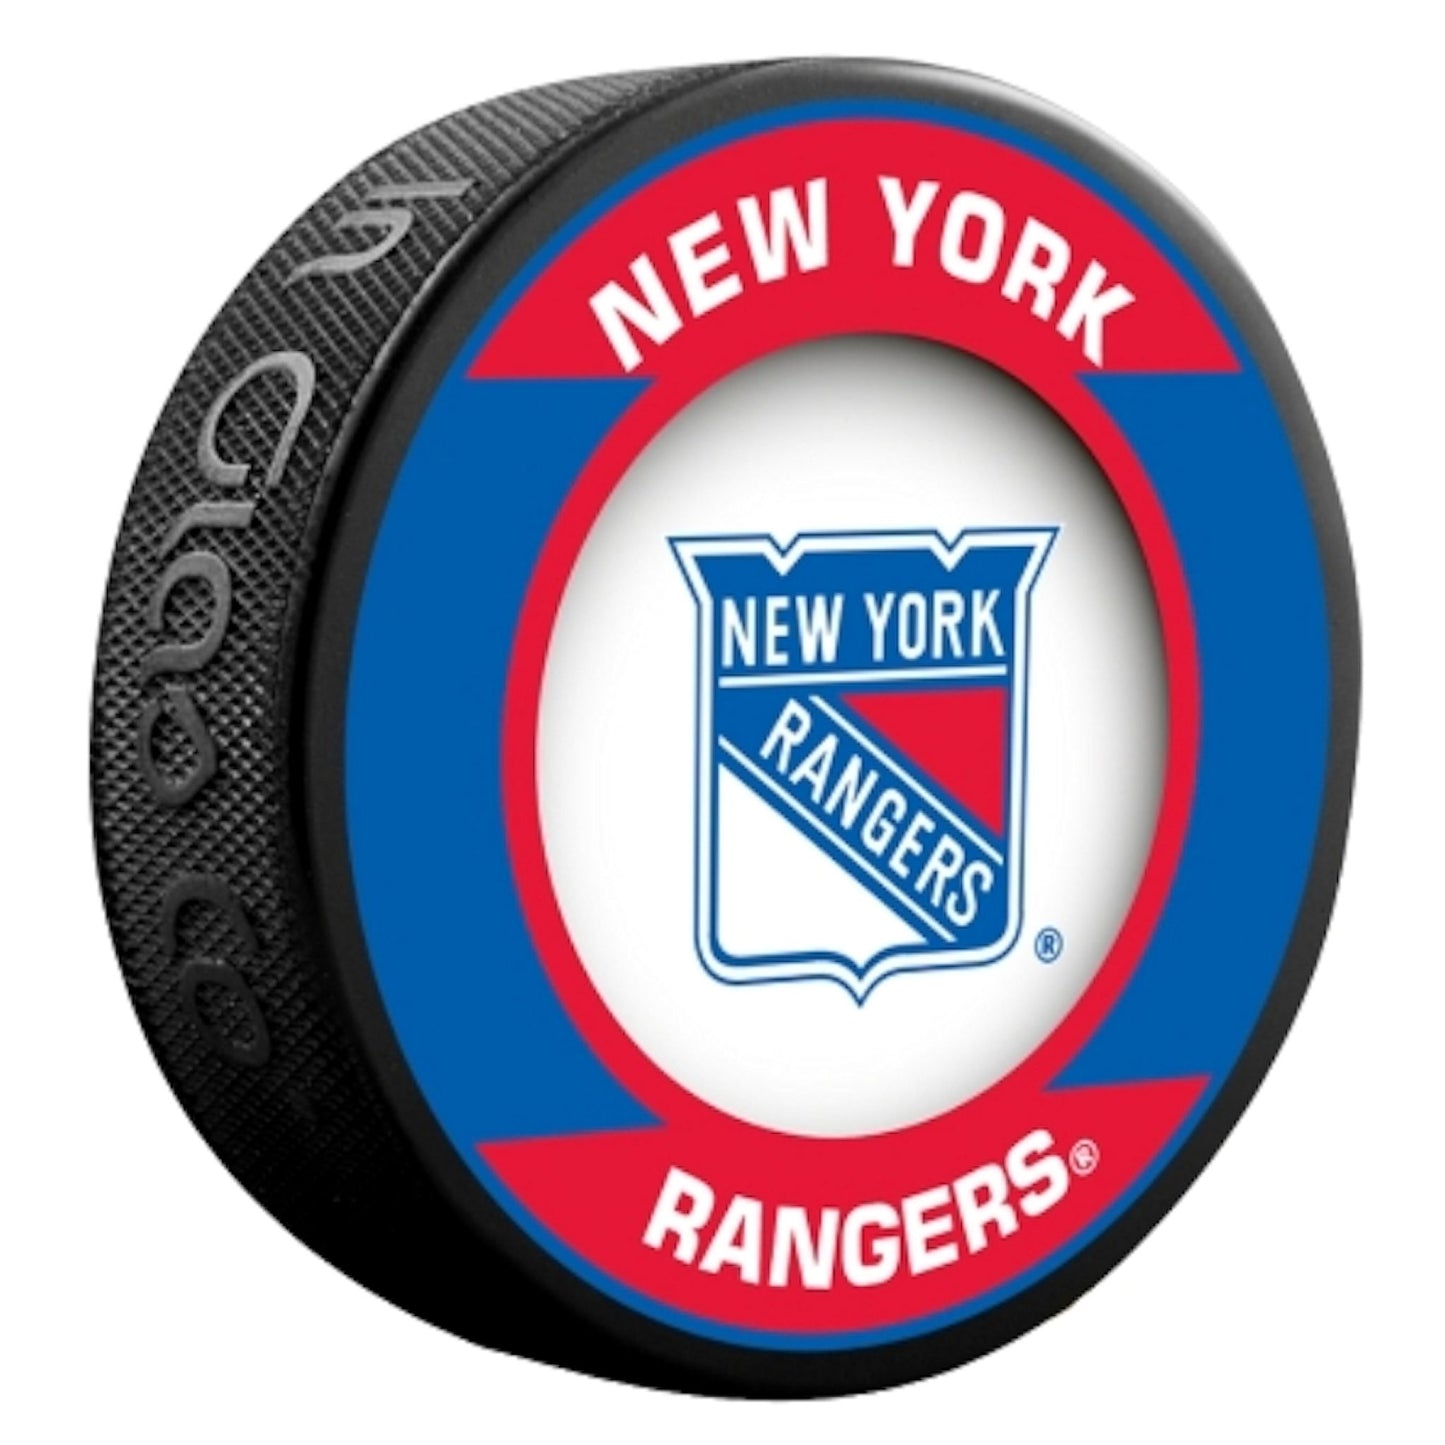 New York Rangers Retro Series Collectible Hockey Puck